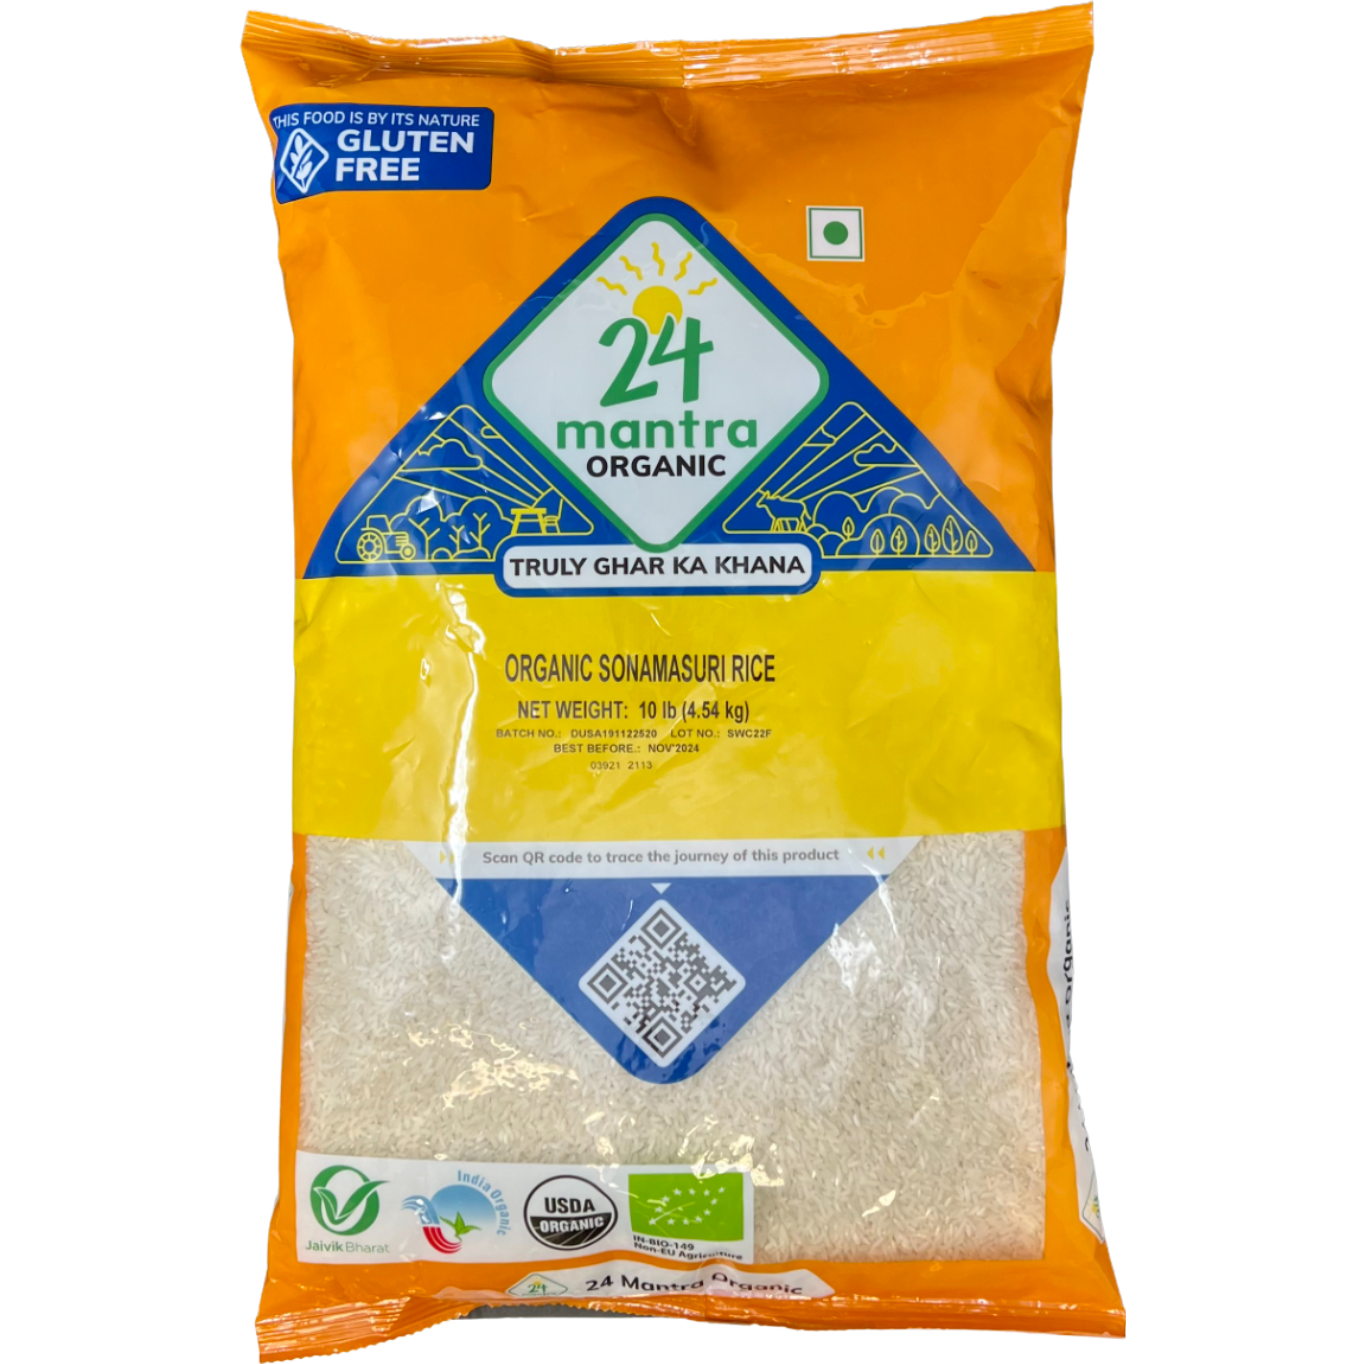 Case of 4 - 24 Mantra Organic Sonamasuri Rice - 10 Lb (4.5 Kg)